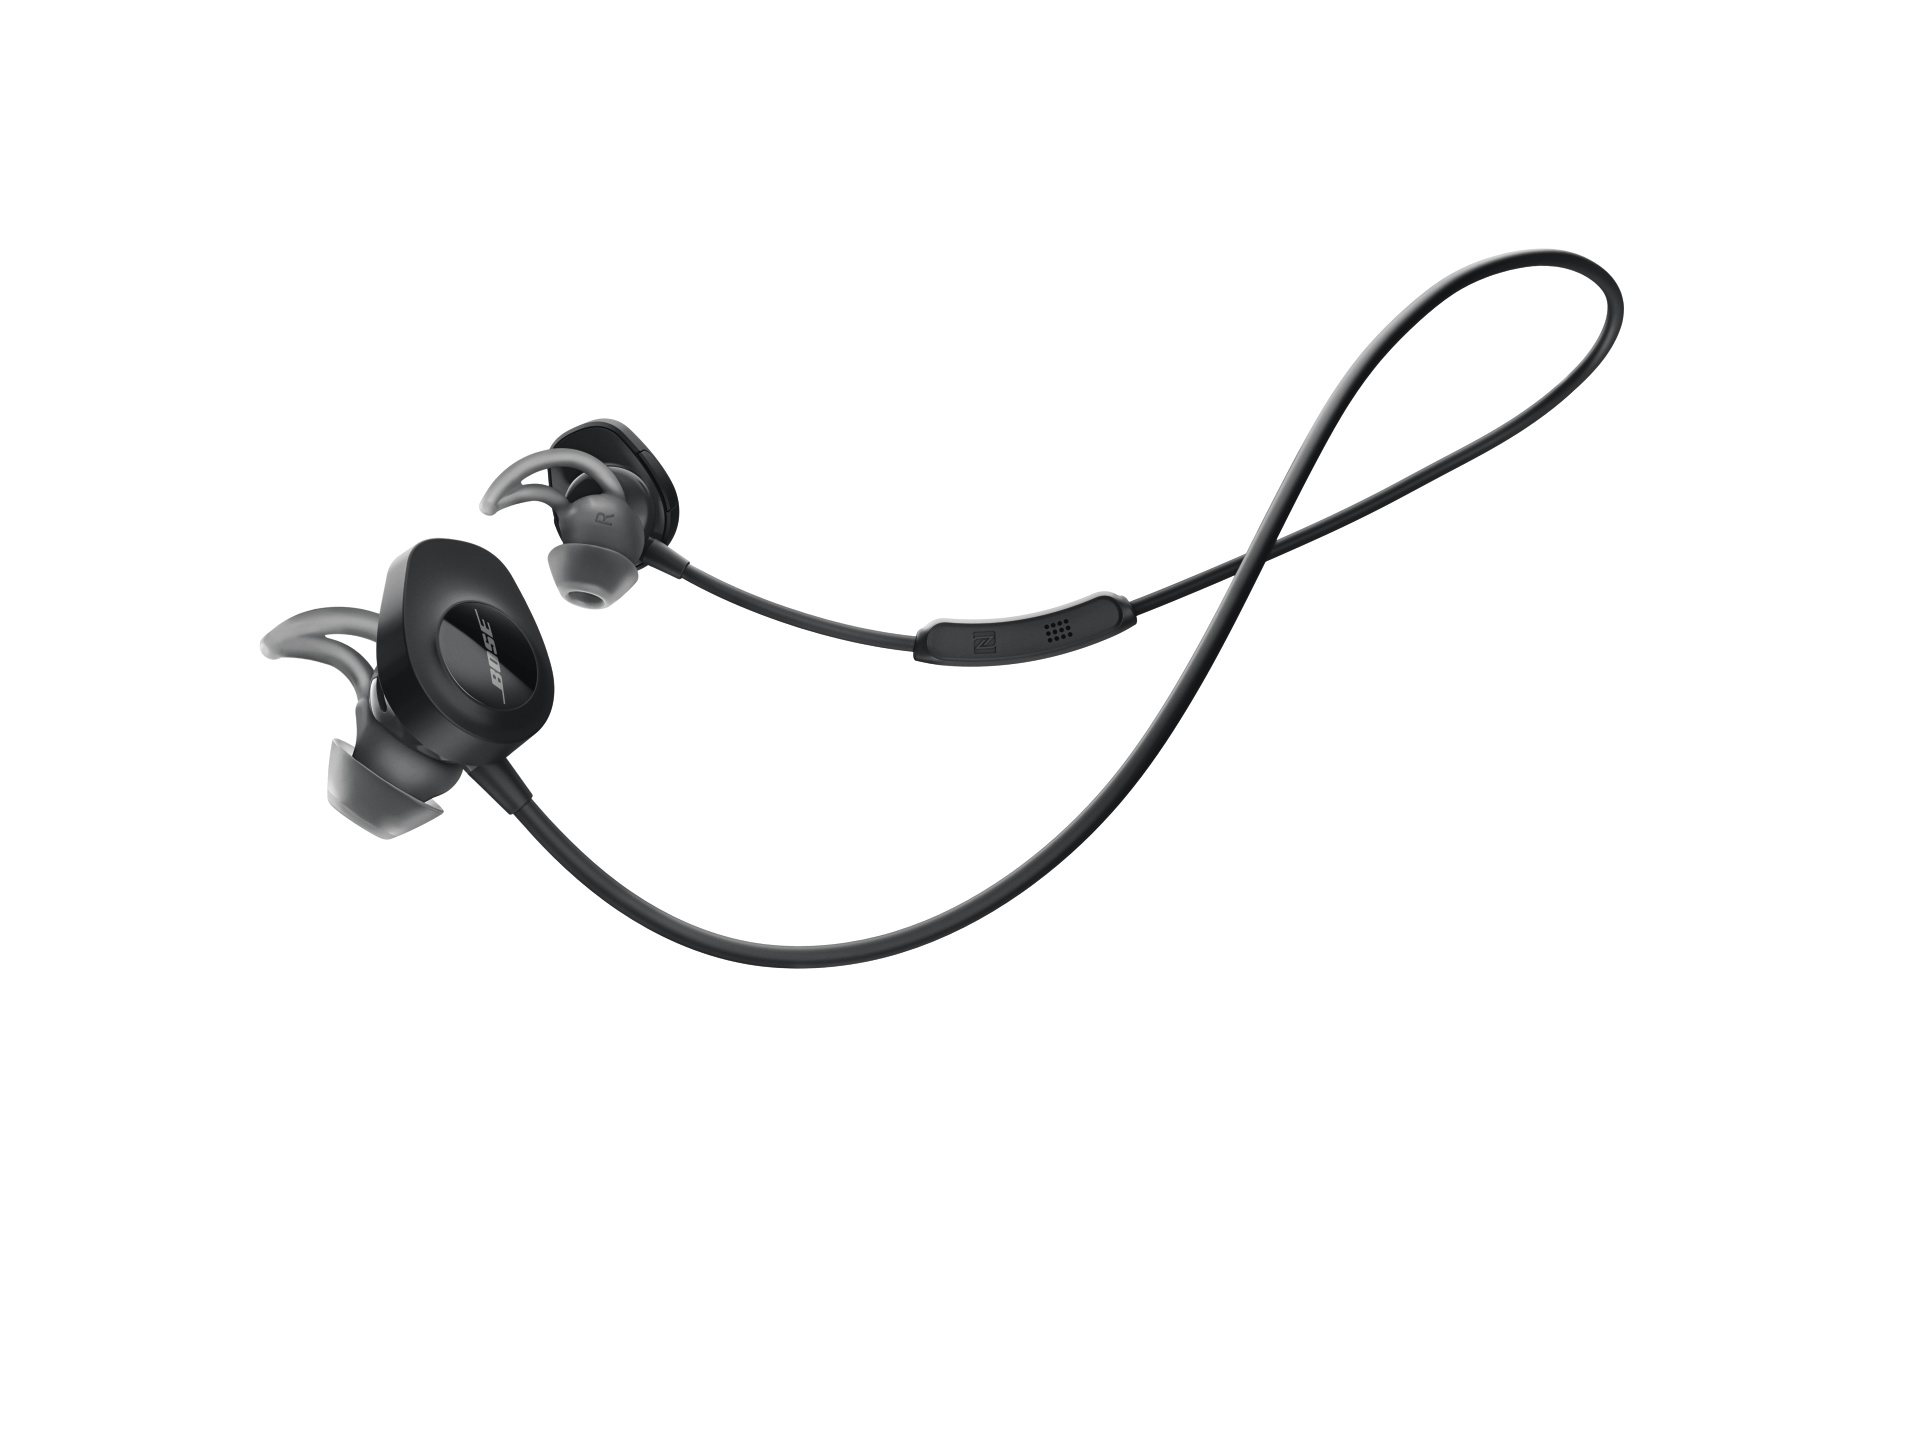 Bose SoundSport Wireless Sports Bluetooth Earbuds, Black - image 9 of 11